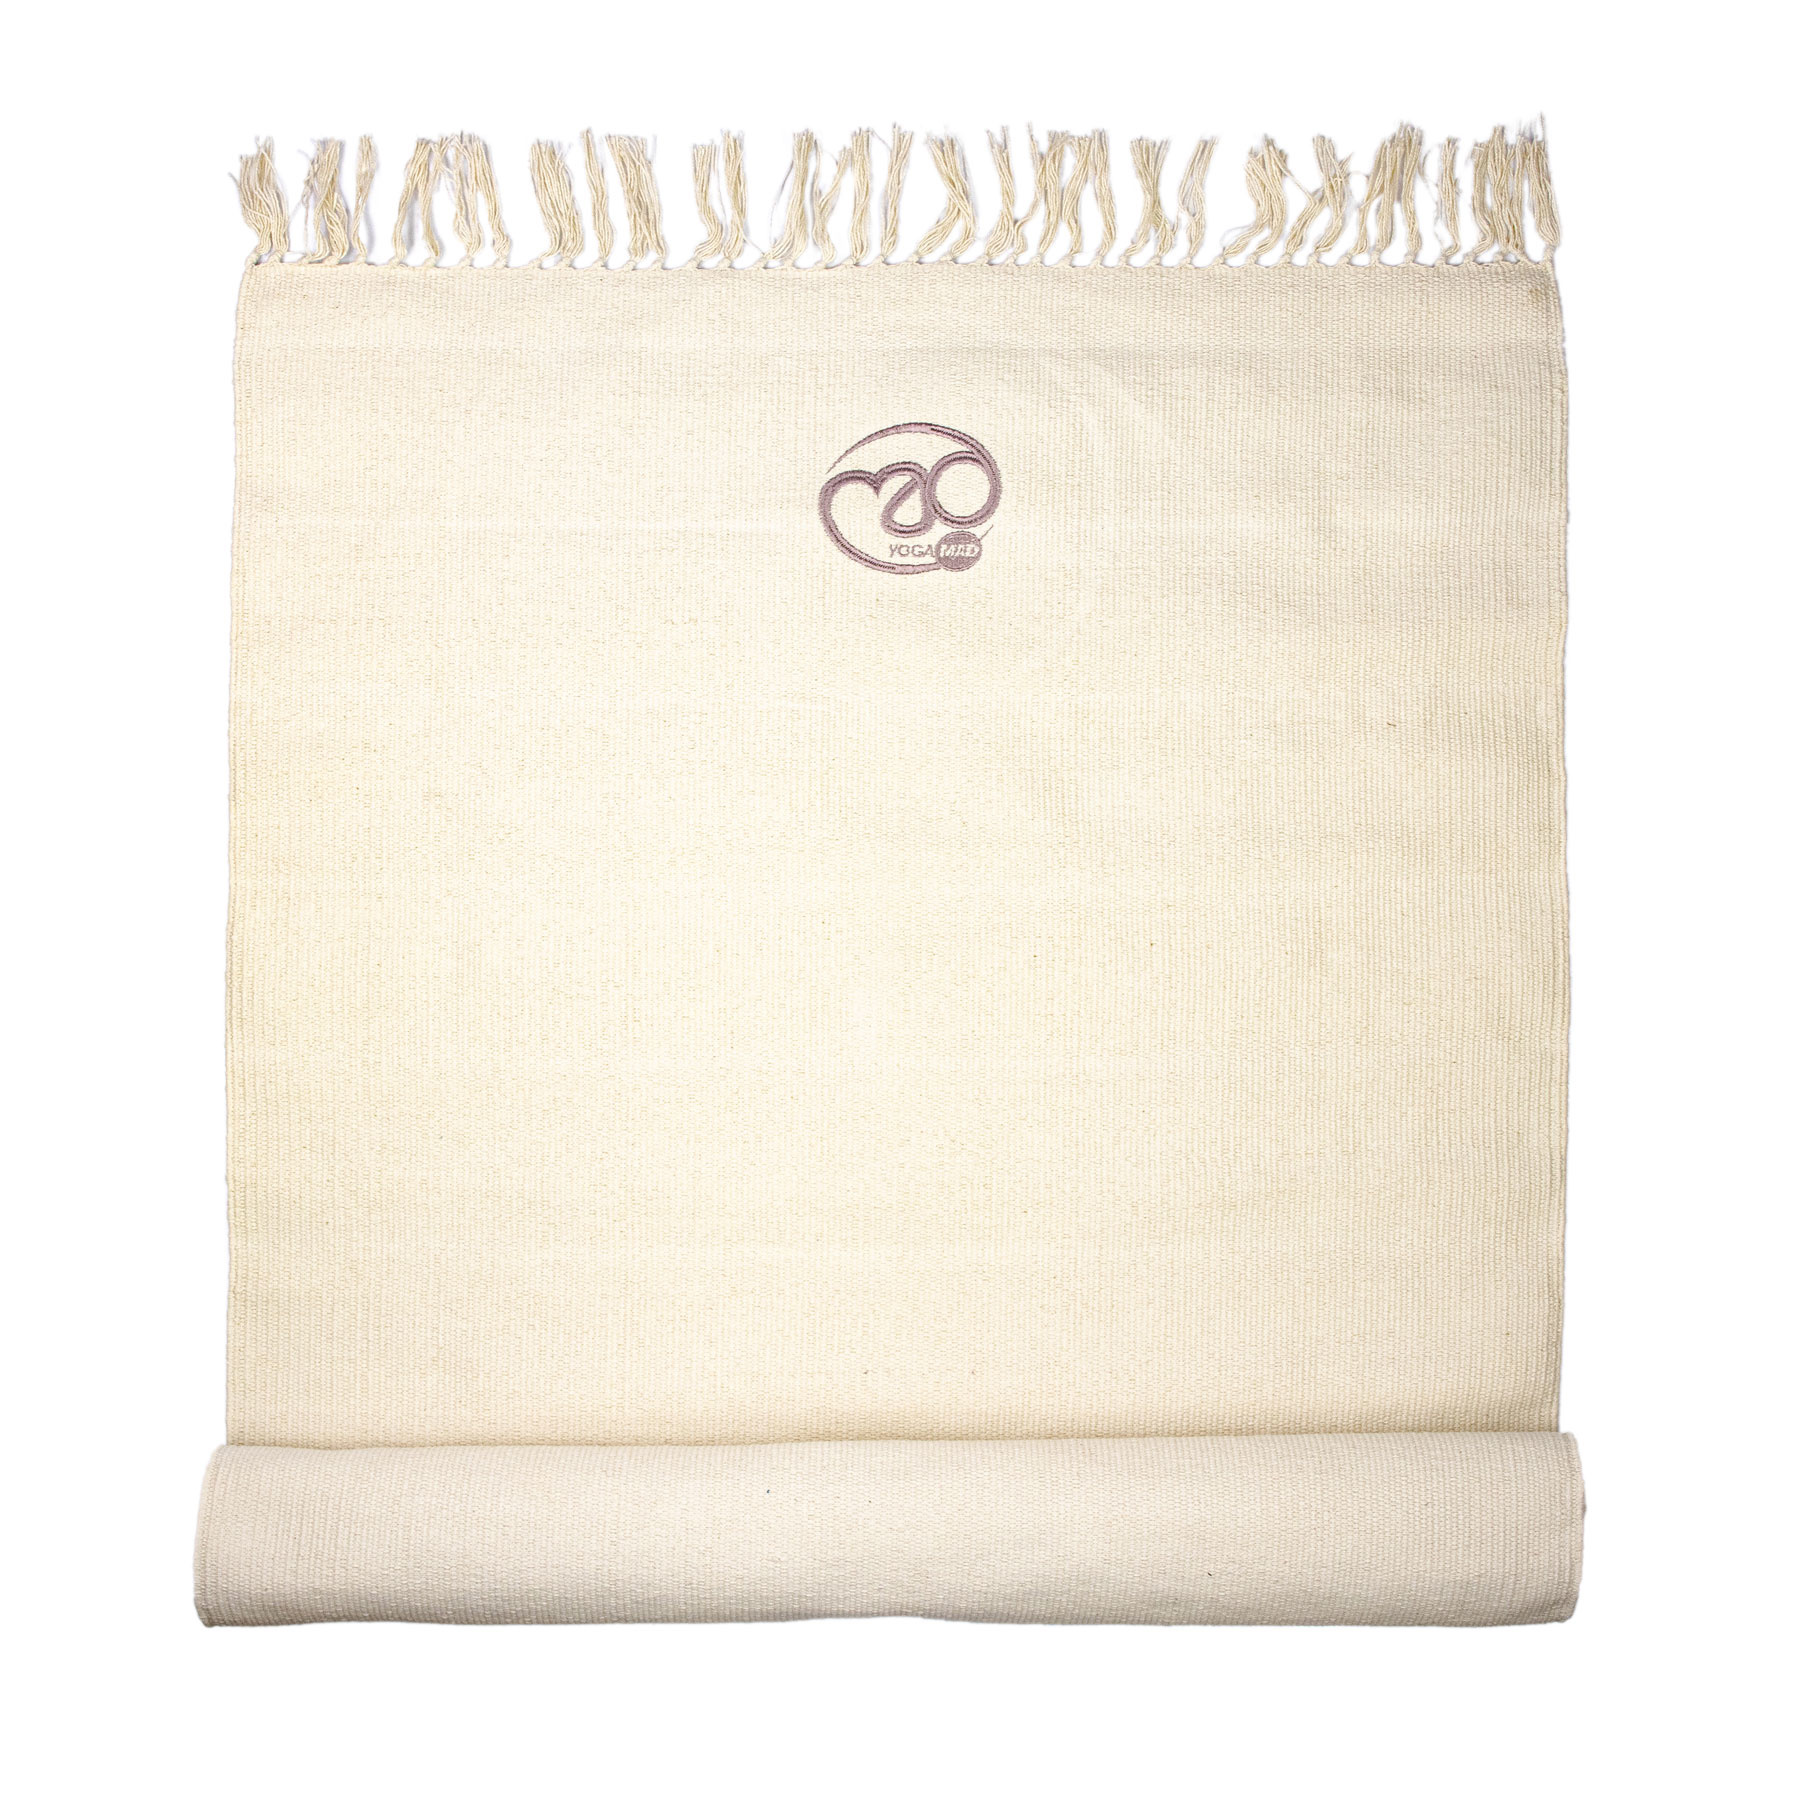 Grip Dot Hot Yoga Towel by Yoga-Mad, Non-Slip